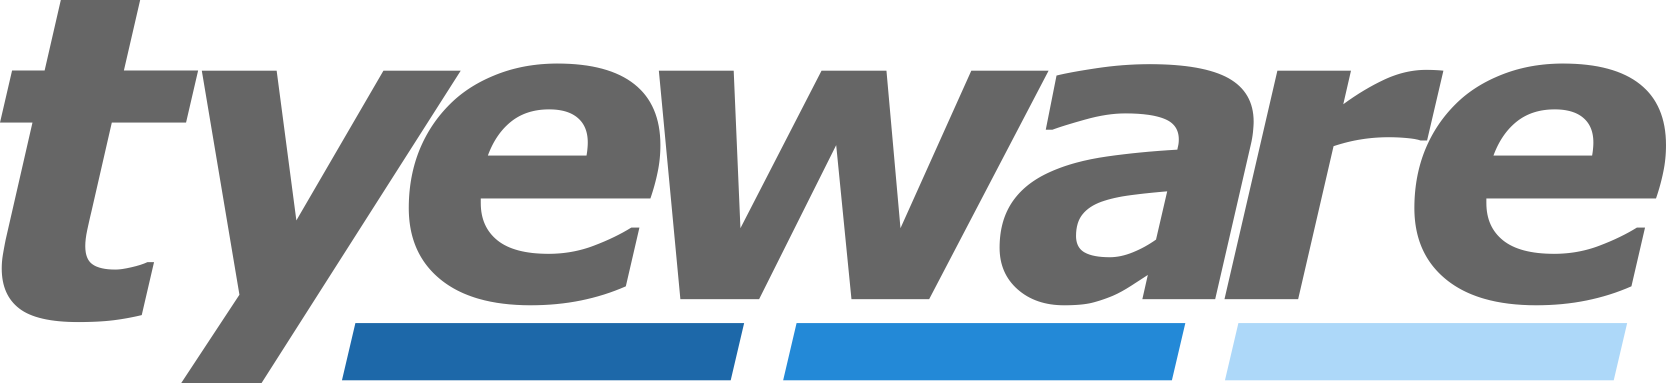 Tyeware Logo Blue 2019.png